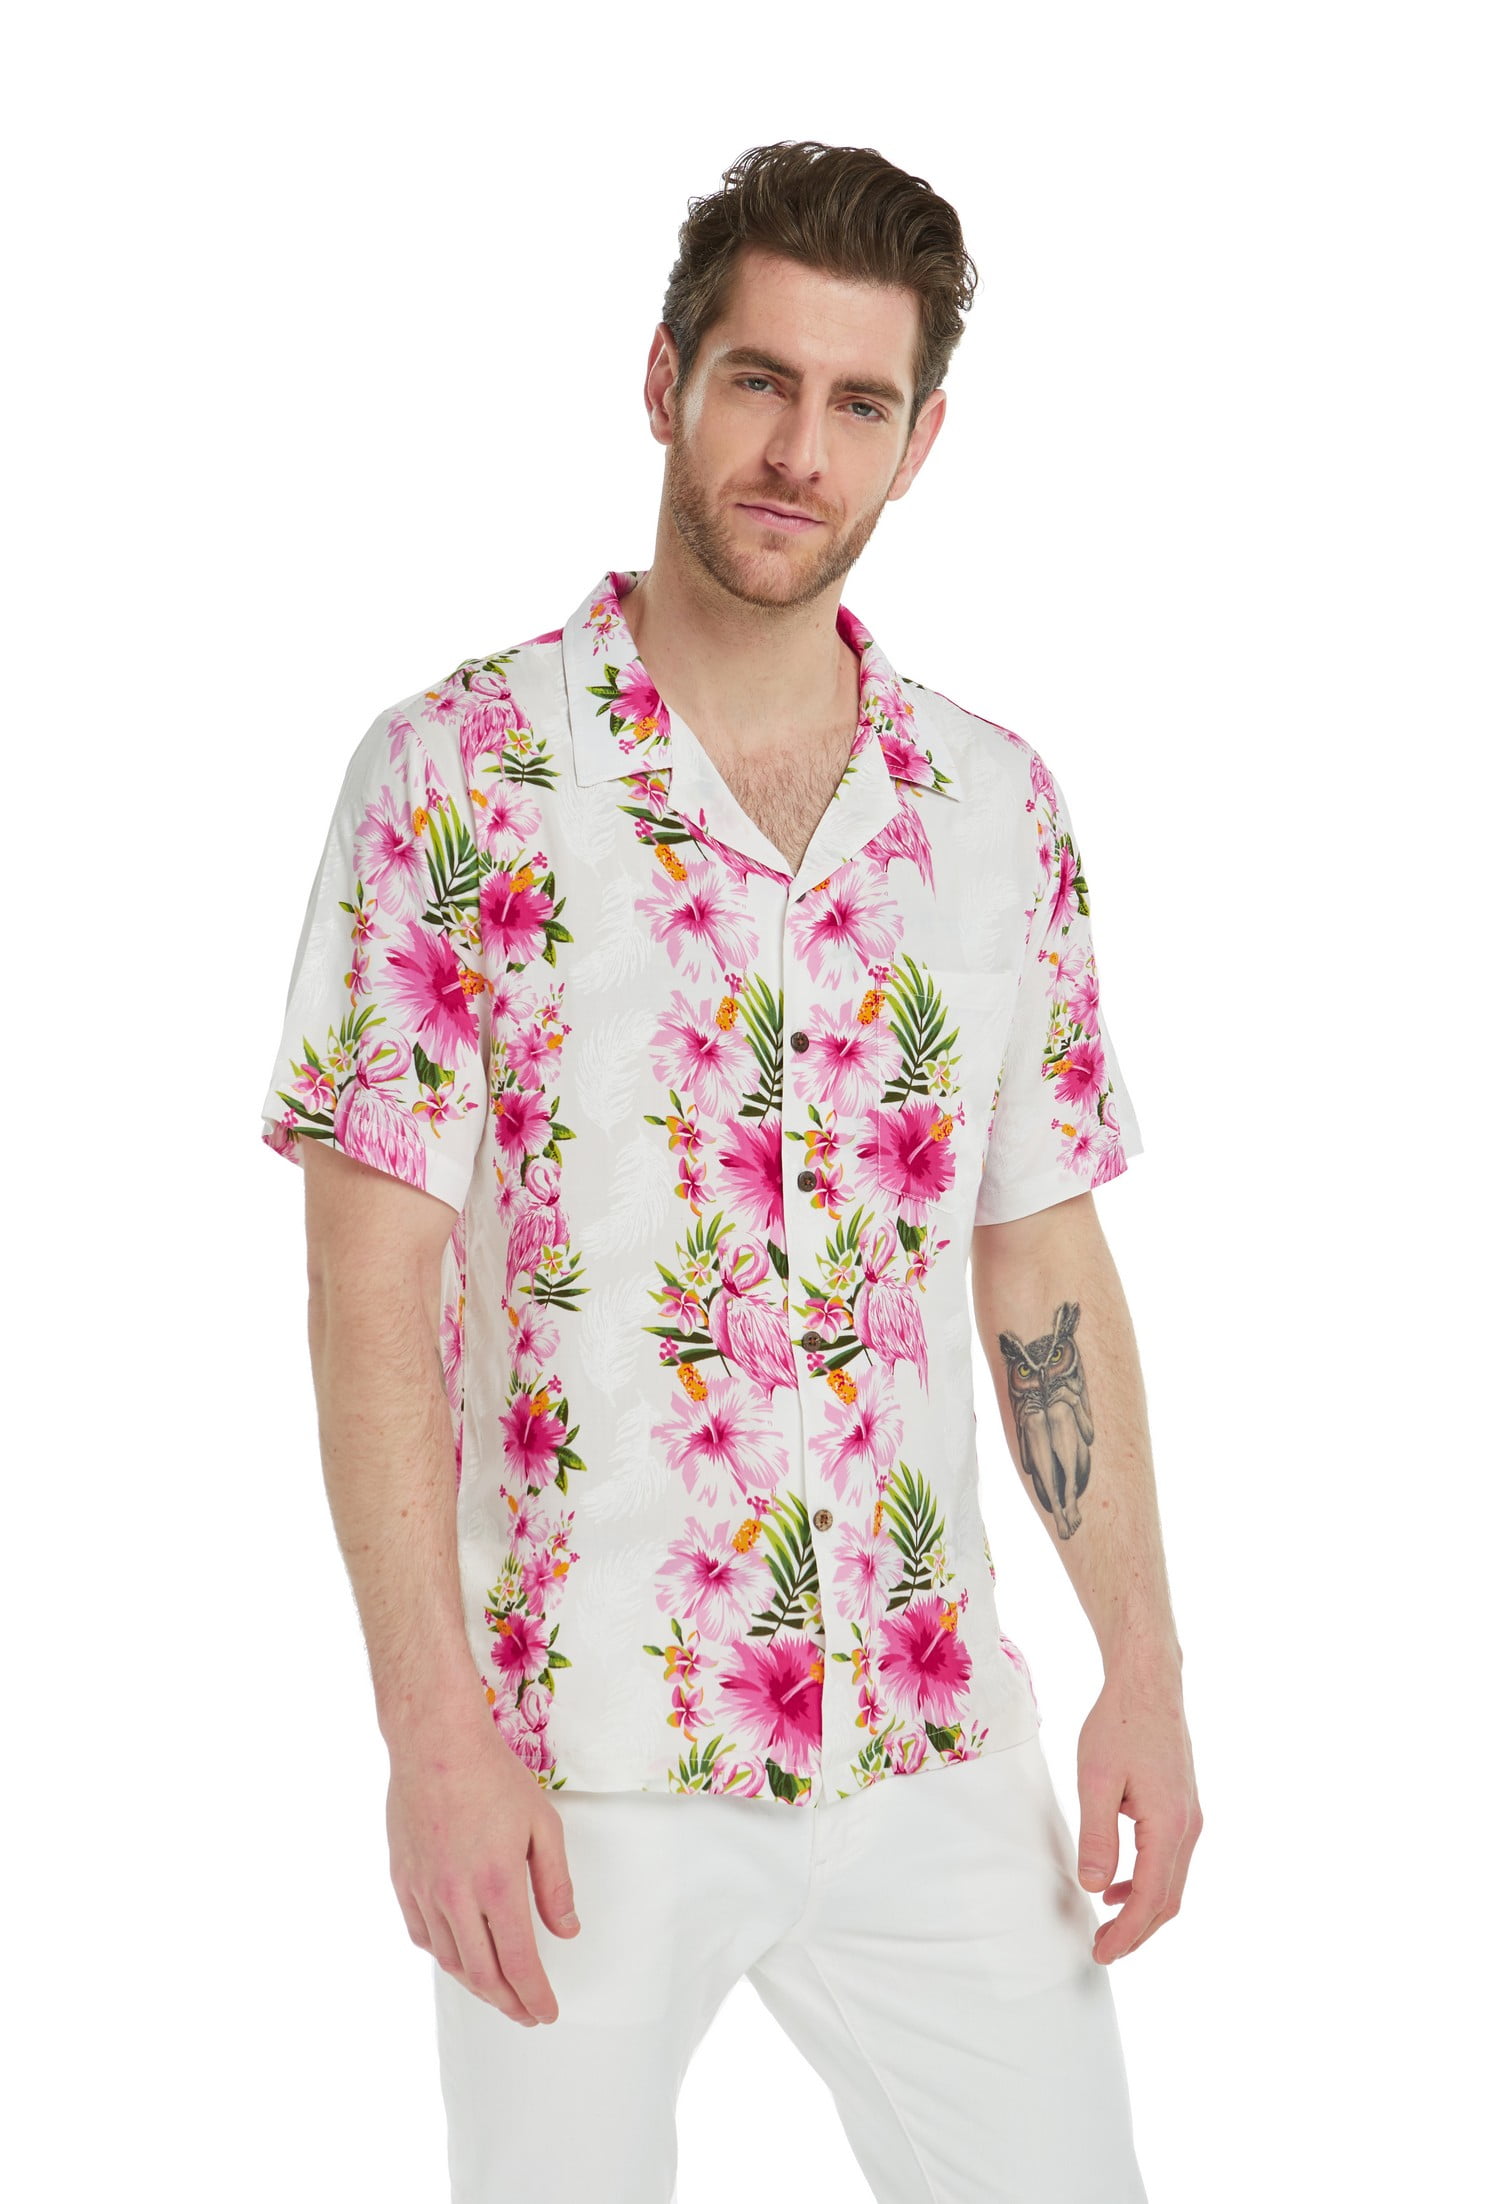 Hawaii Hangover Men's Hawaiian Shirt Aloha Shirt Pink Hibiscus Vine White,  up to 6XL